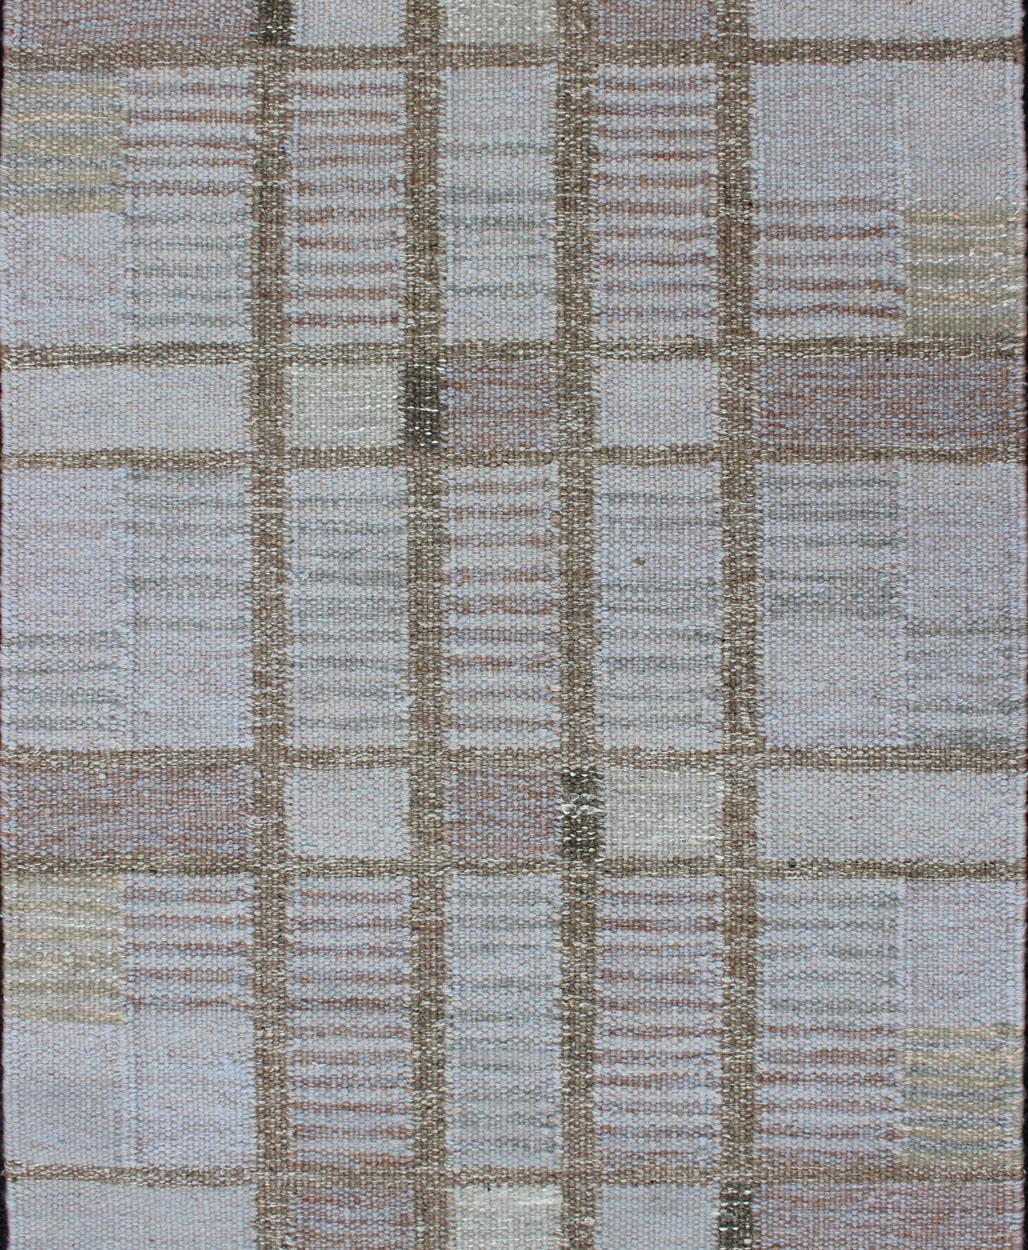 Gray colored geometric stripe block modern Scandinavian flat-weave design rug, rug RJK-23277-SHB-047-G, country of origin / type: India / Scandinavian flat-weave.

This Scandinavian flat-weave is inspired by the work of Swedish textile designers